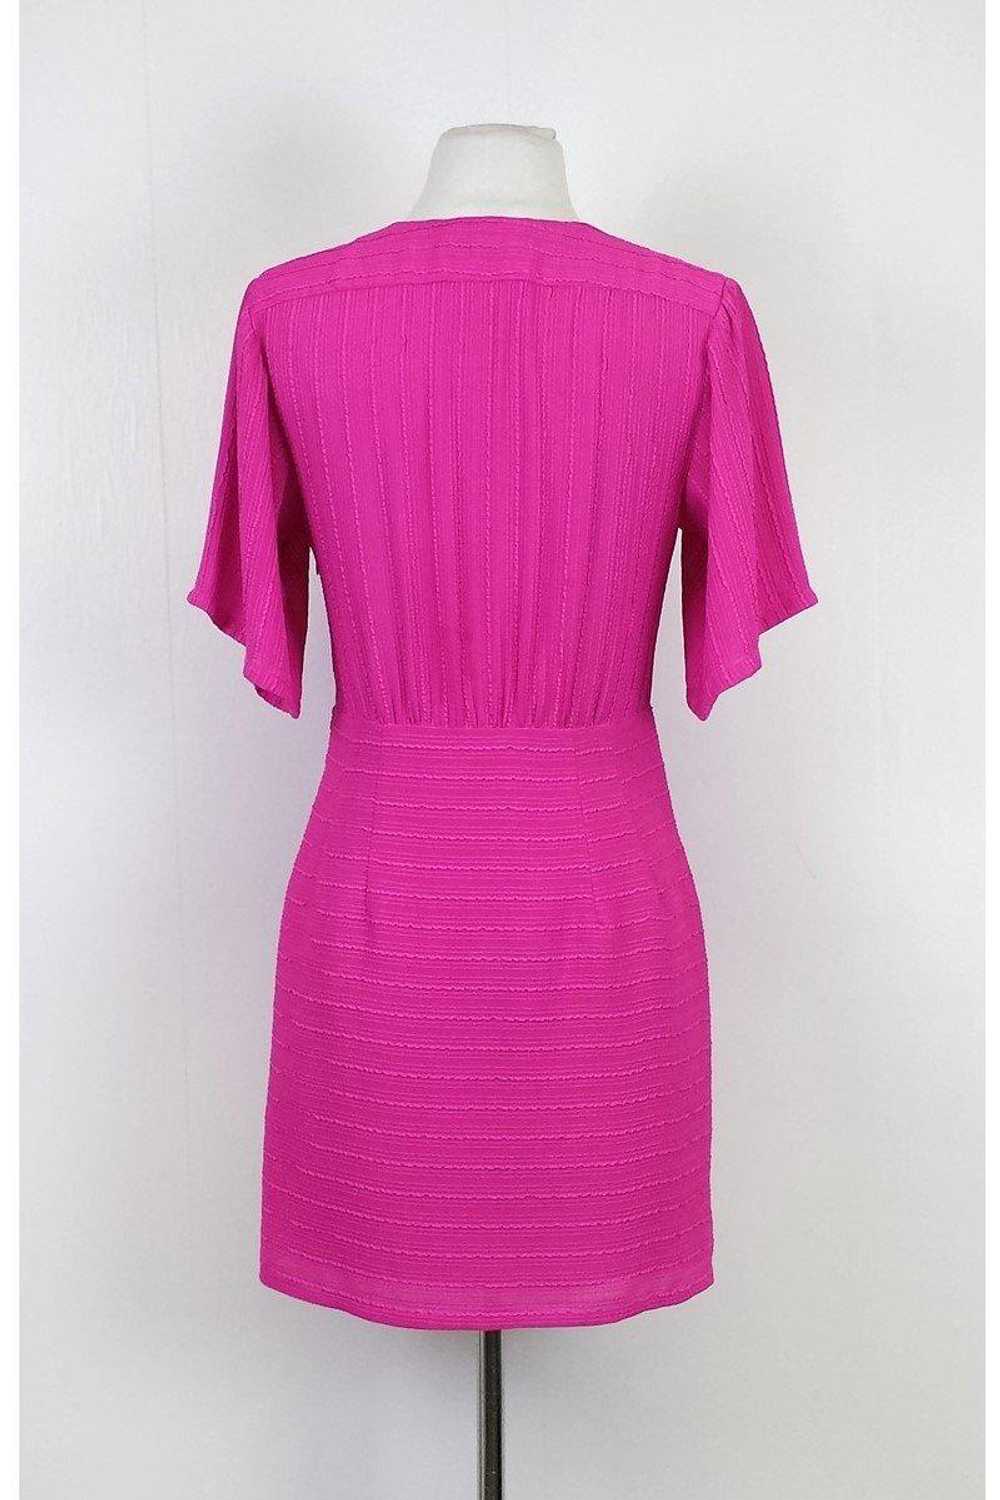 Nanette Lepore - Hot Pink Textured Dress Sz 2 - image 3